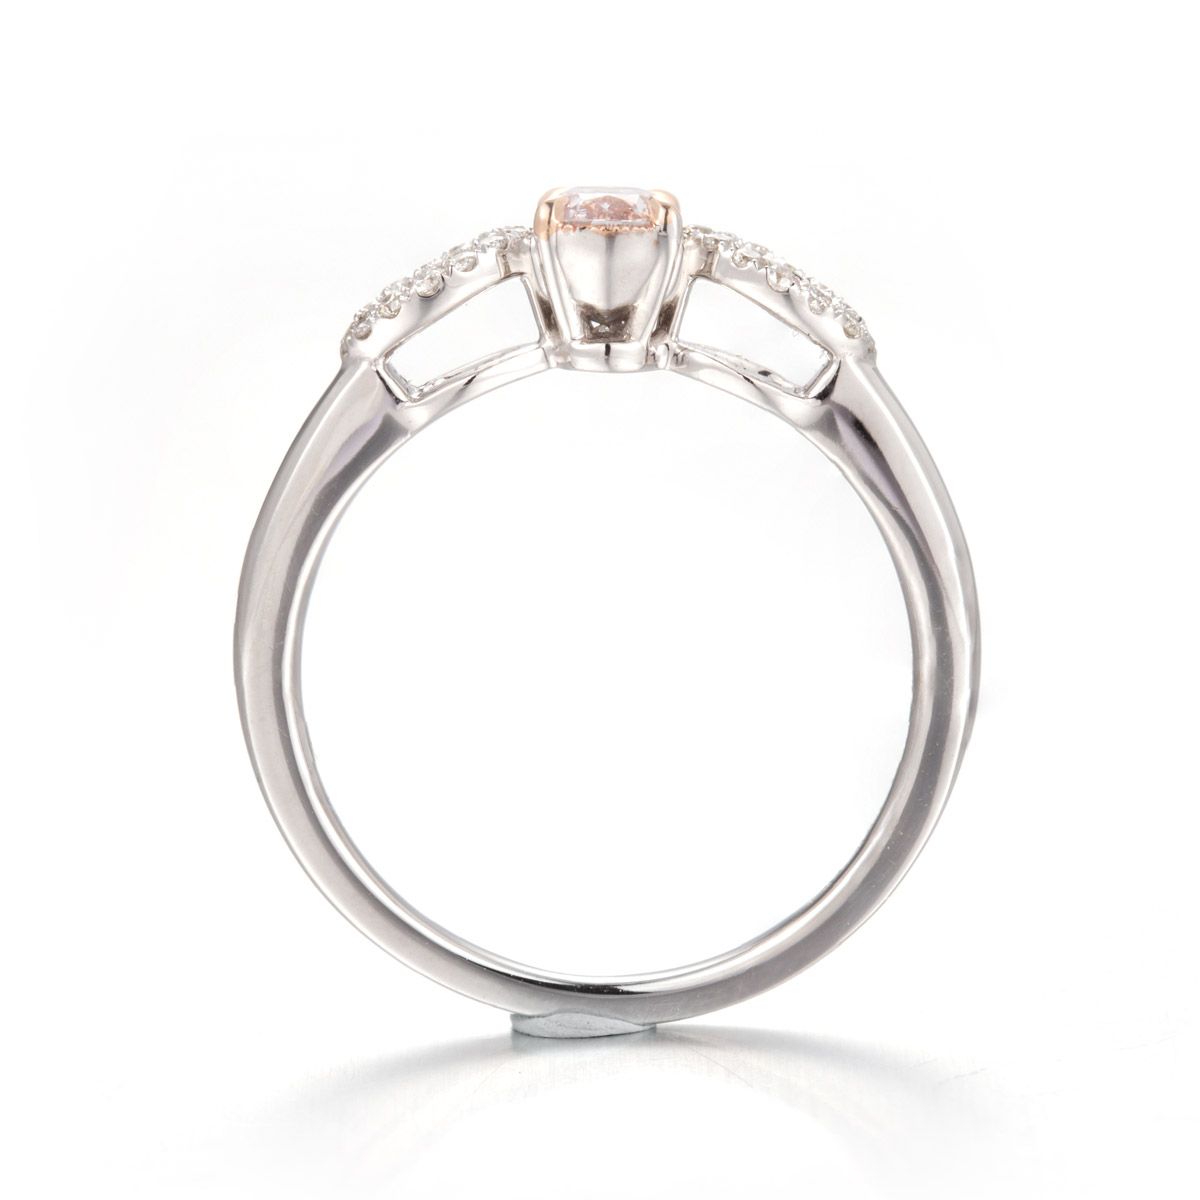 Light Pink Diamond Ring, 0.36 Carat, Cushion shape, GIA Certified, 6177599550